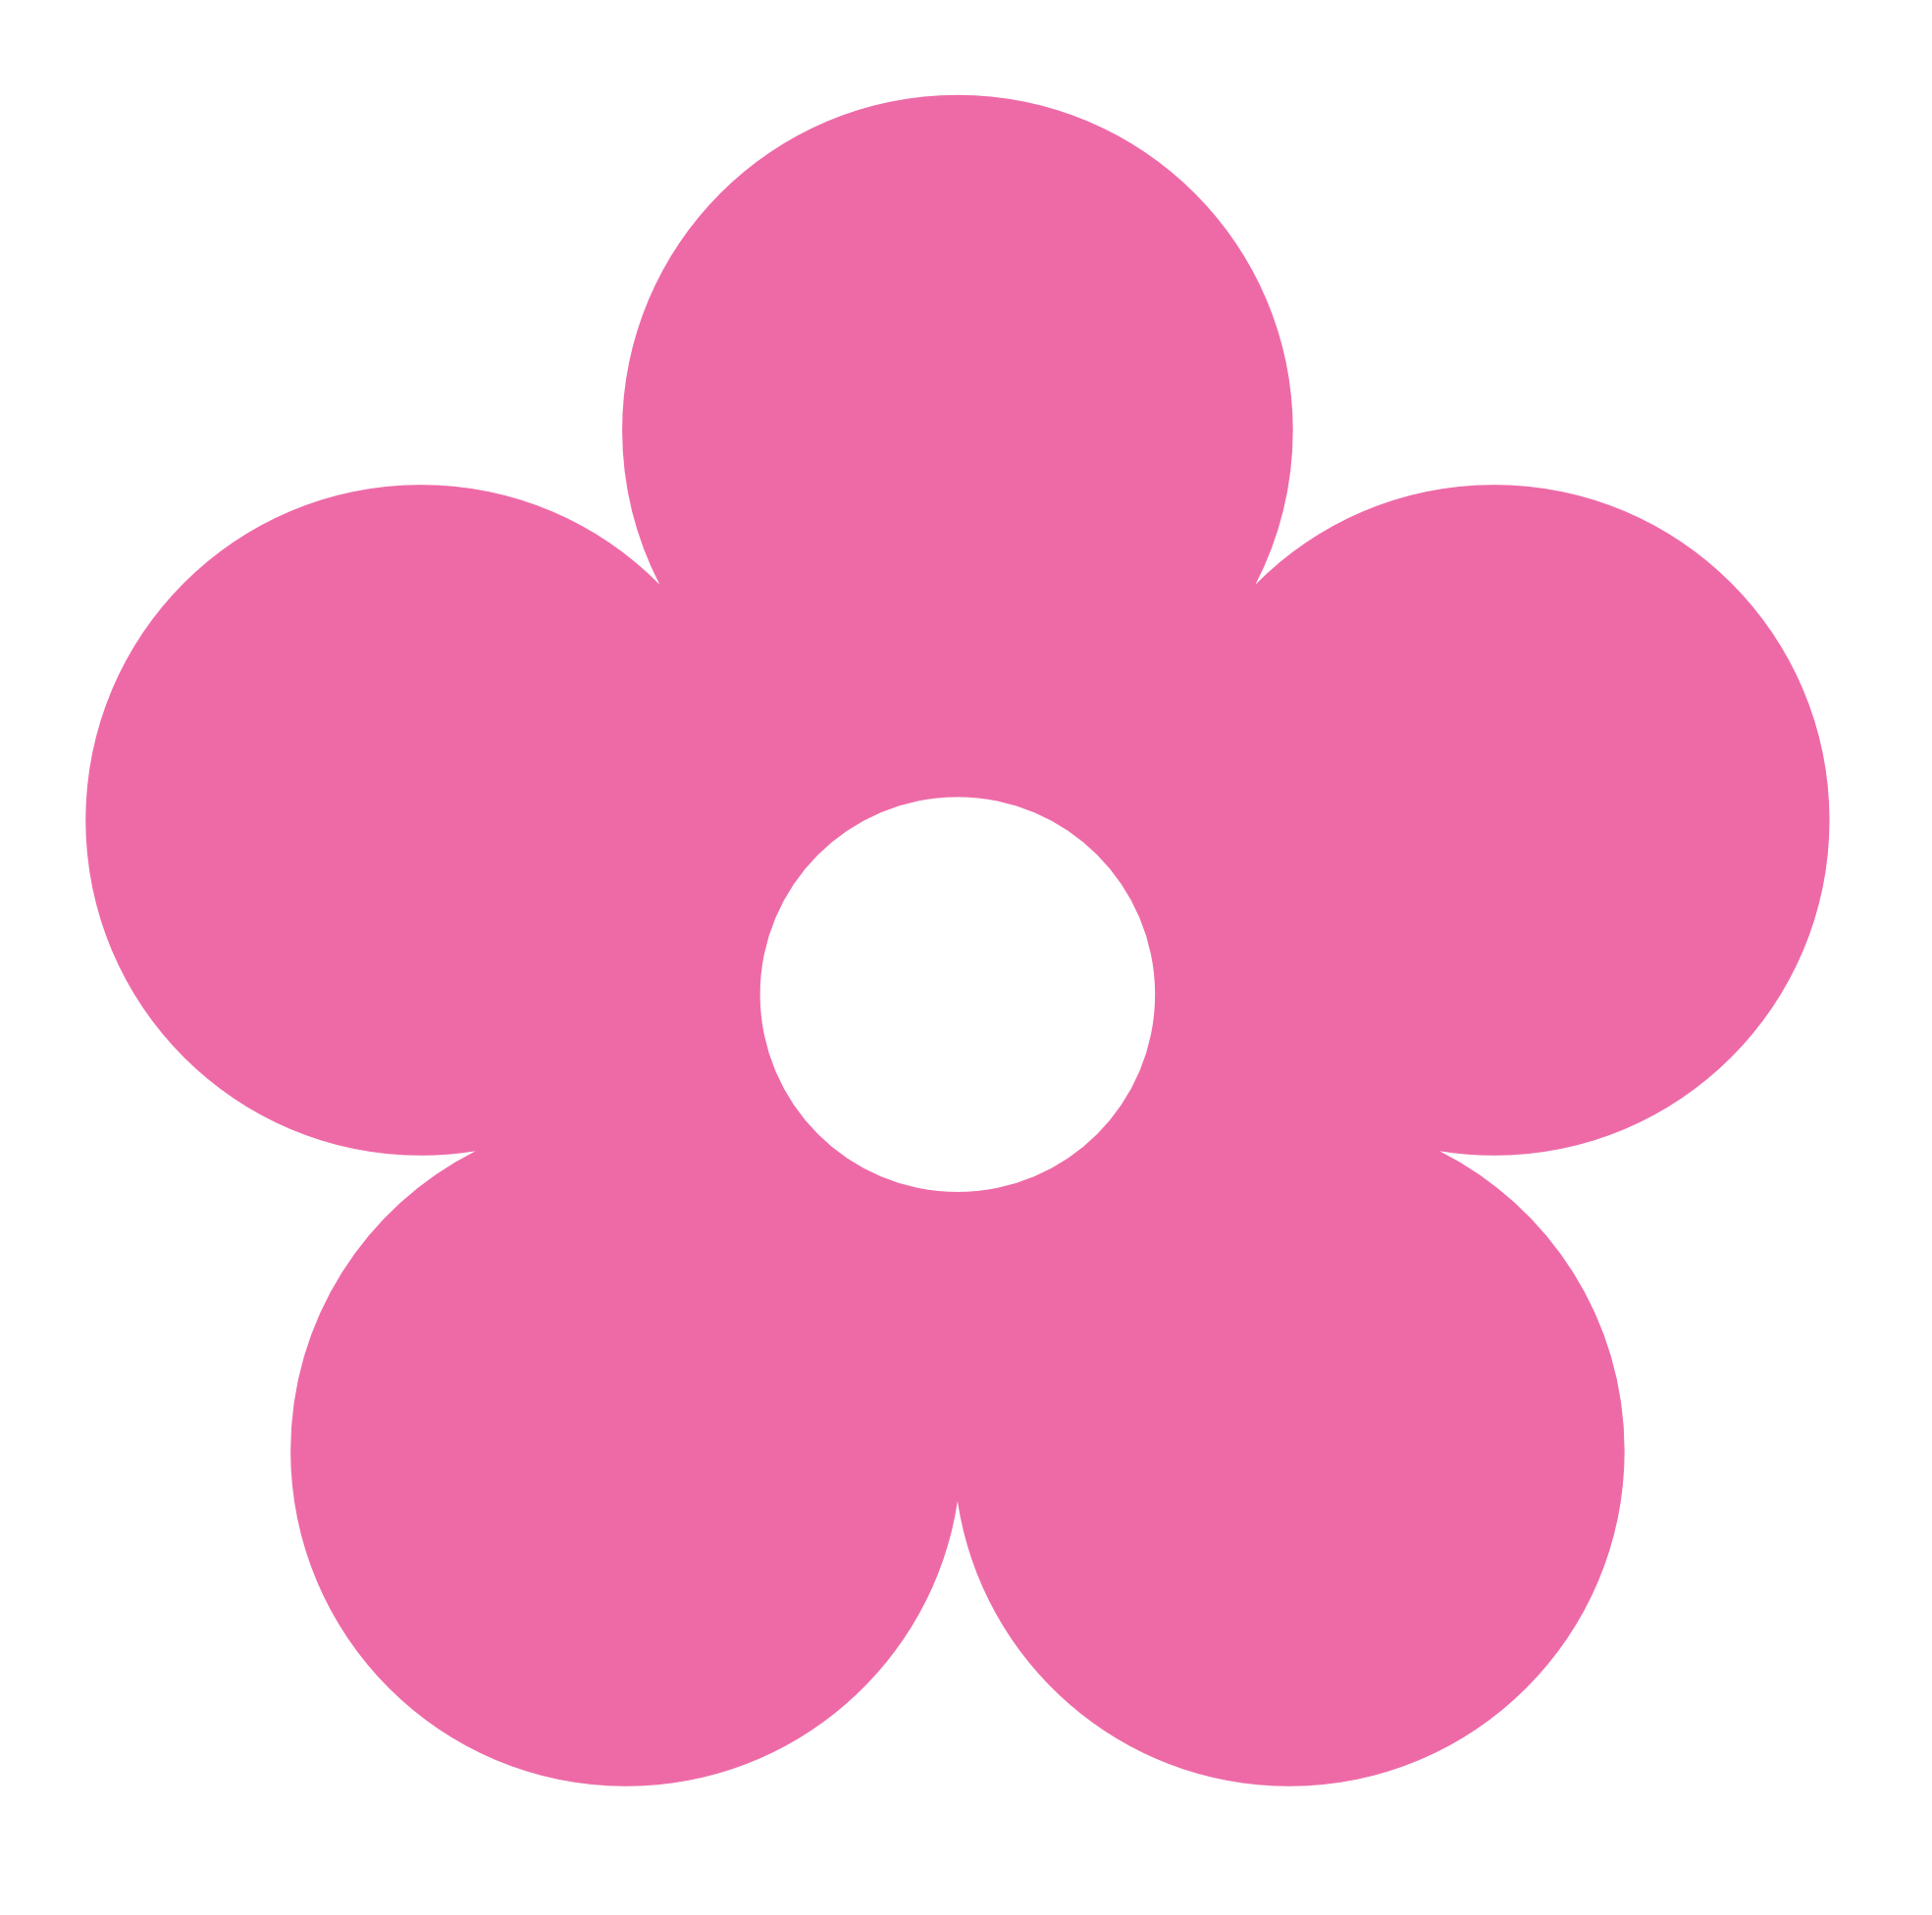 pink flower vector